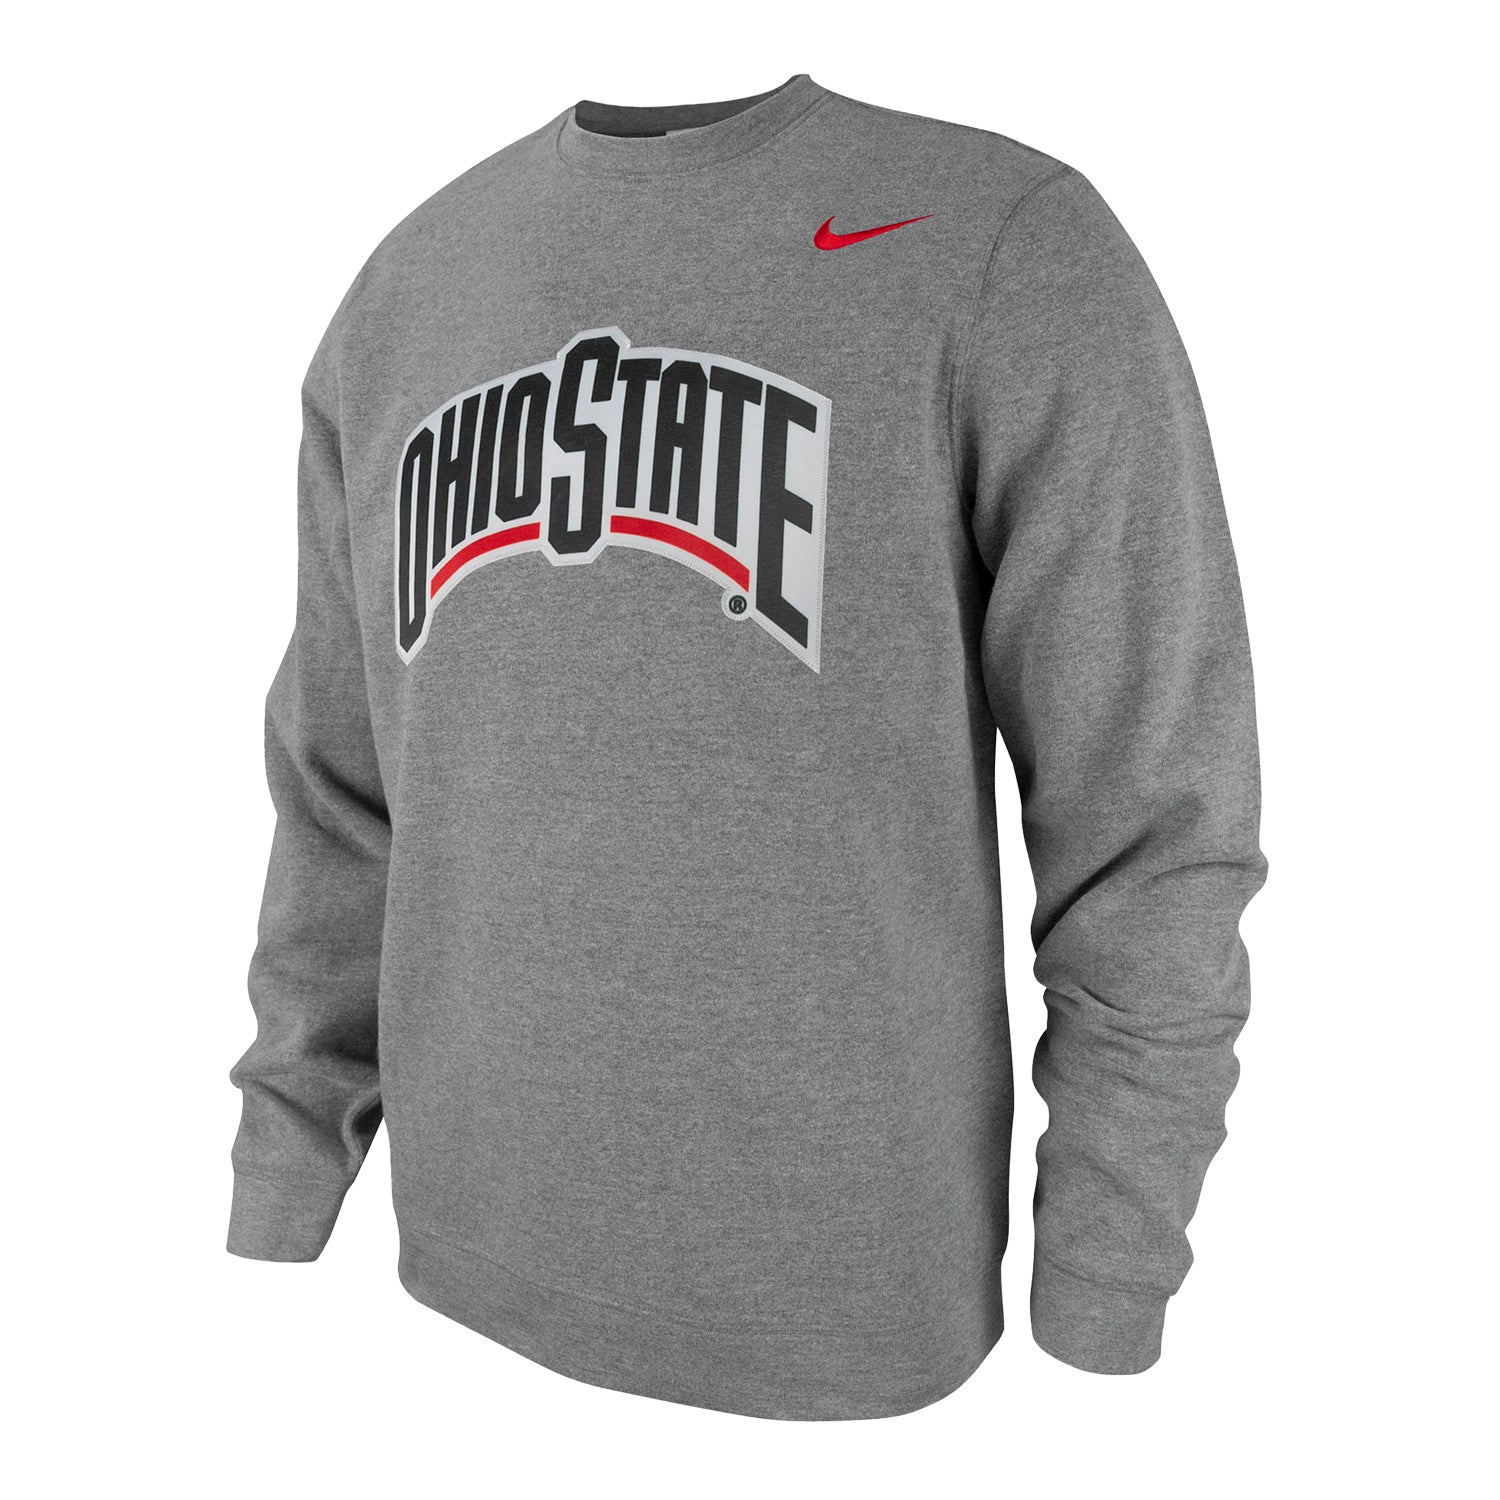 Ohio State Buckeyes Tackle Twill Gray Crewneck Sweatshirt